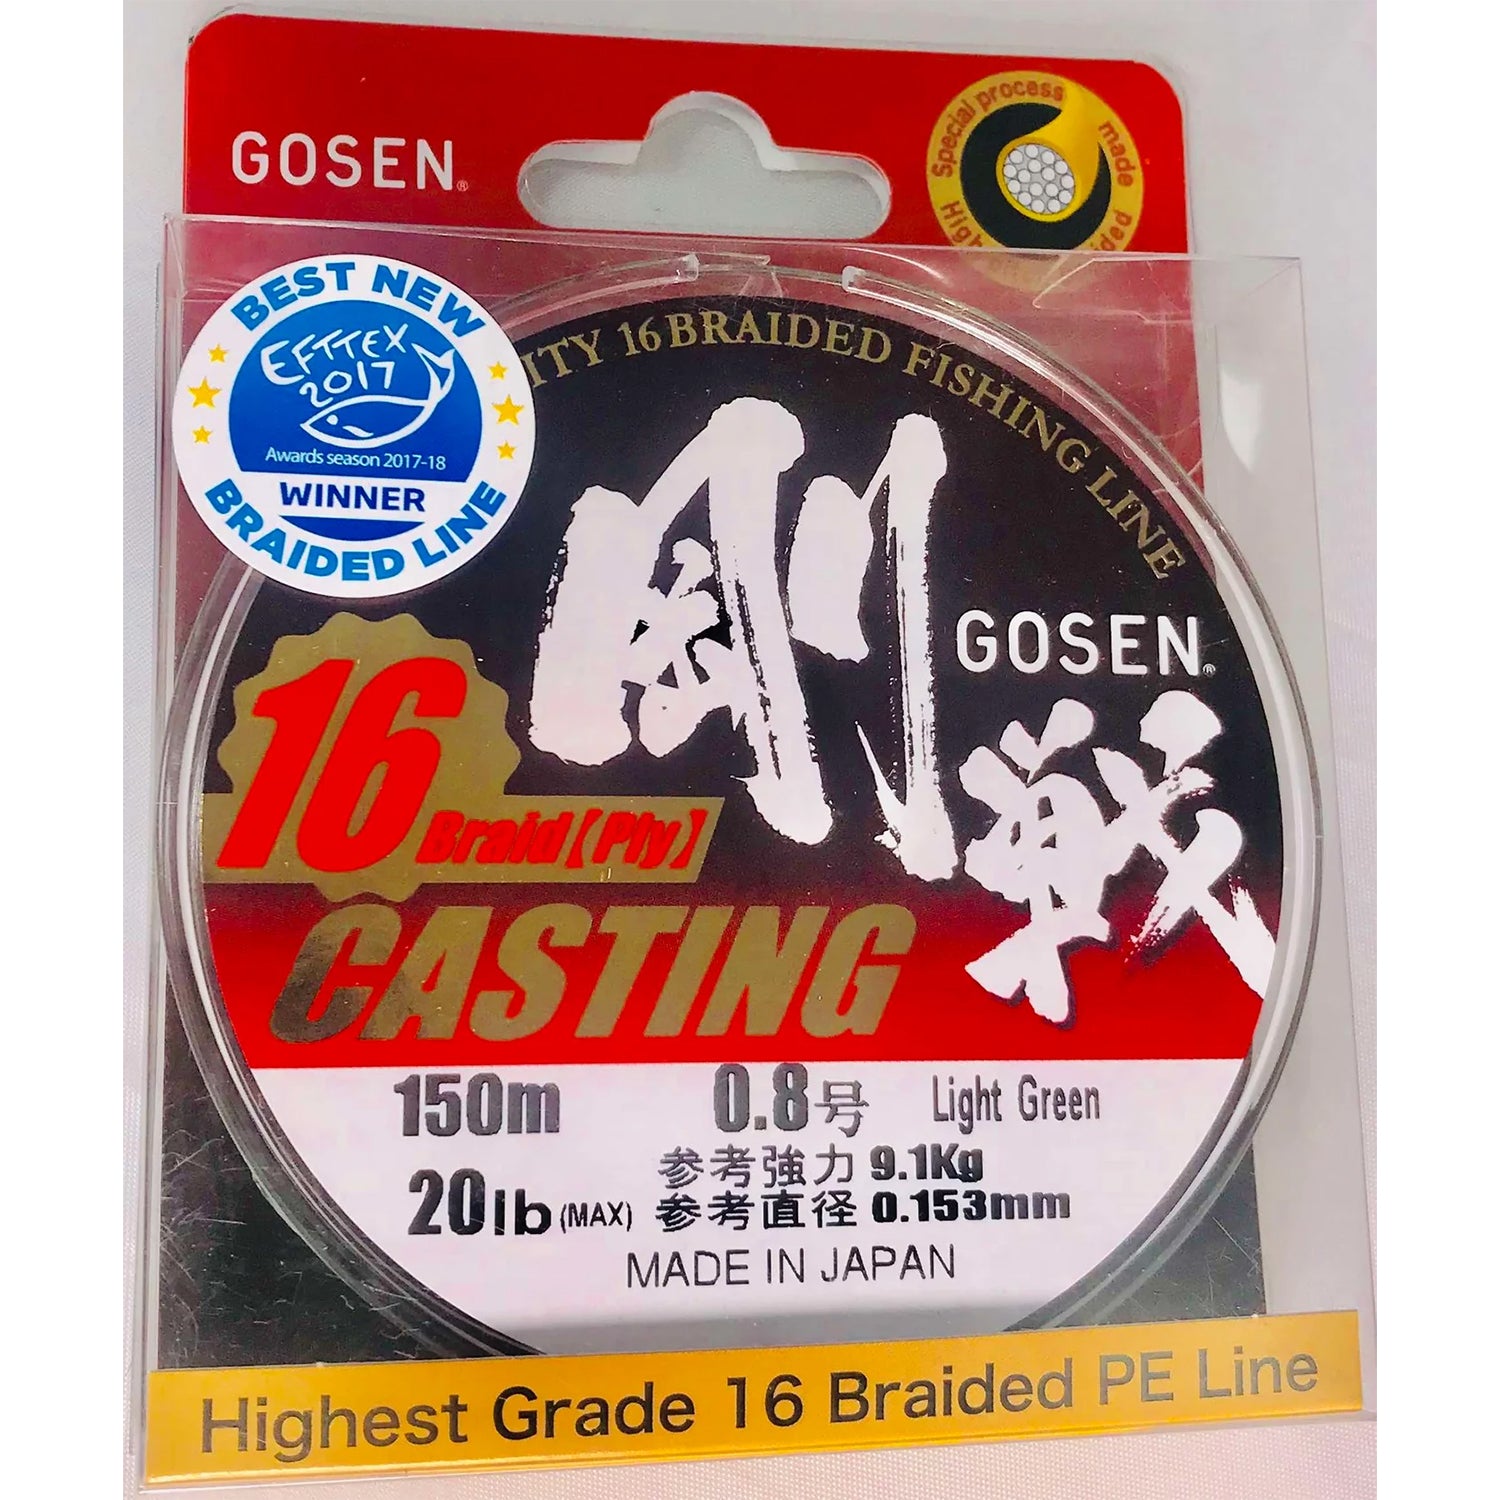 Gosen 16 Ply Casting 150m Cover